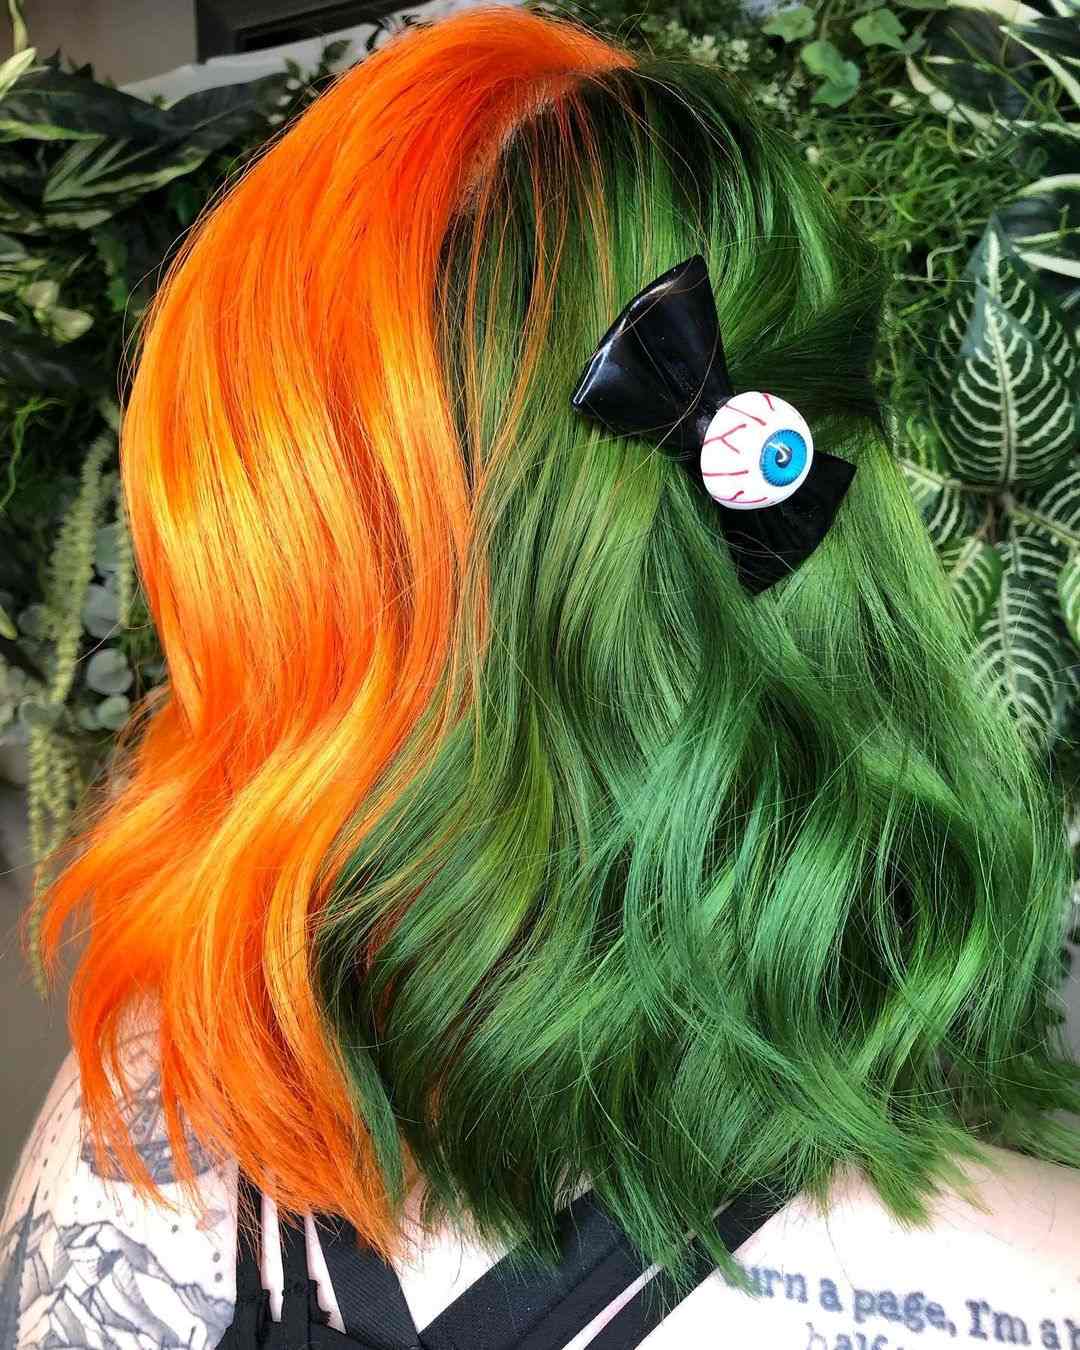 Orange and green split hair